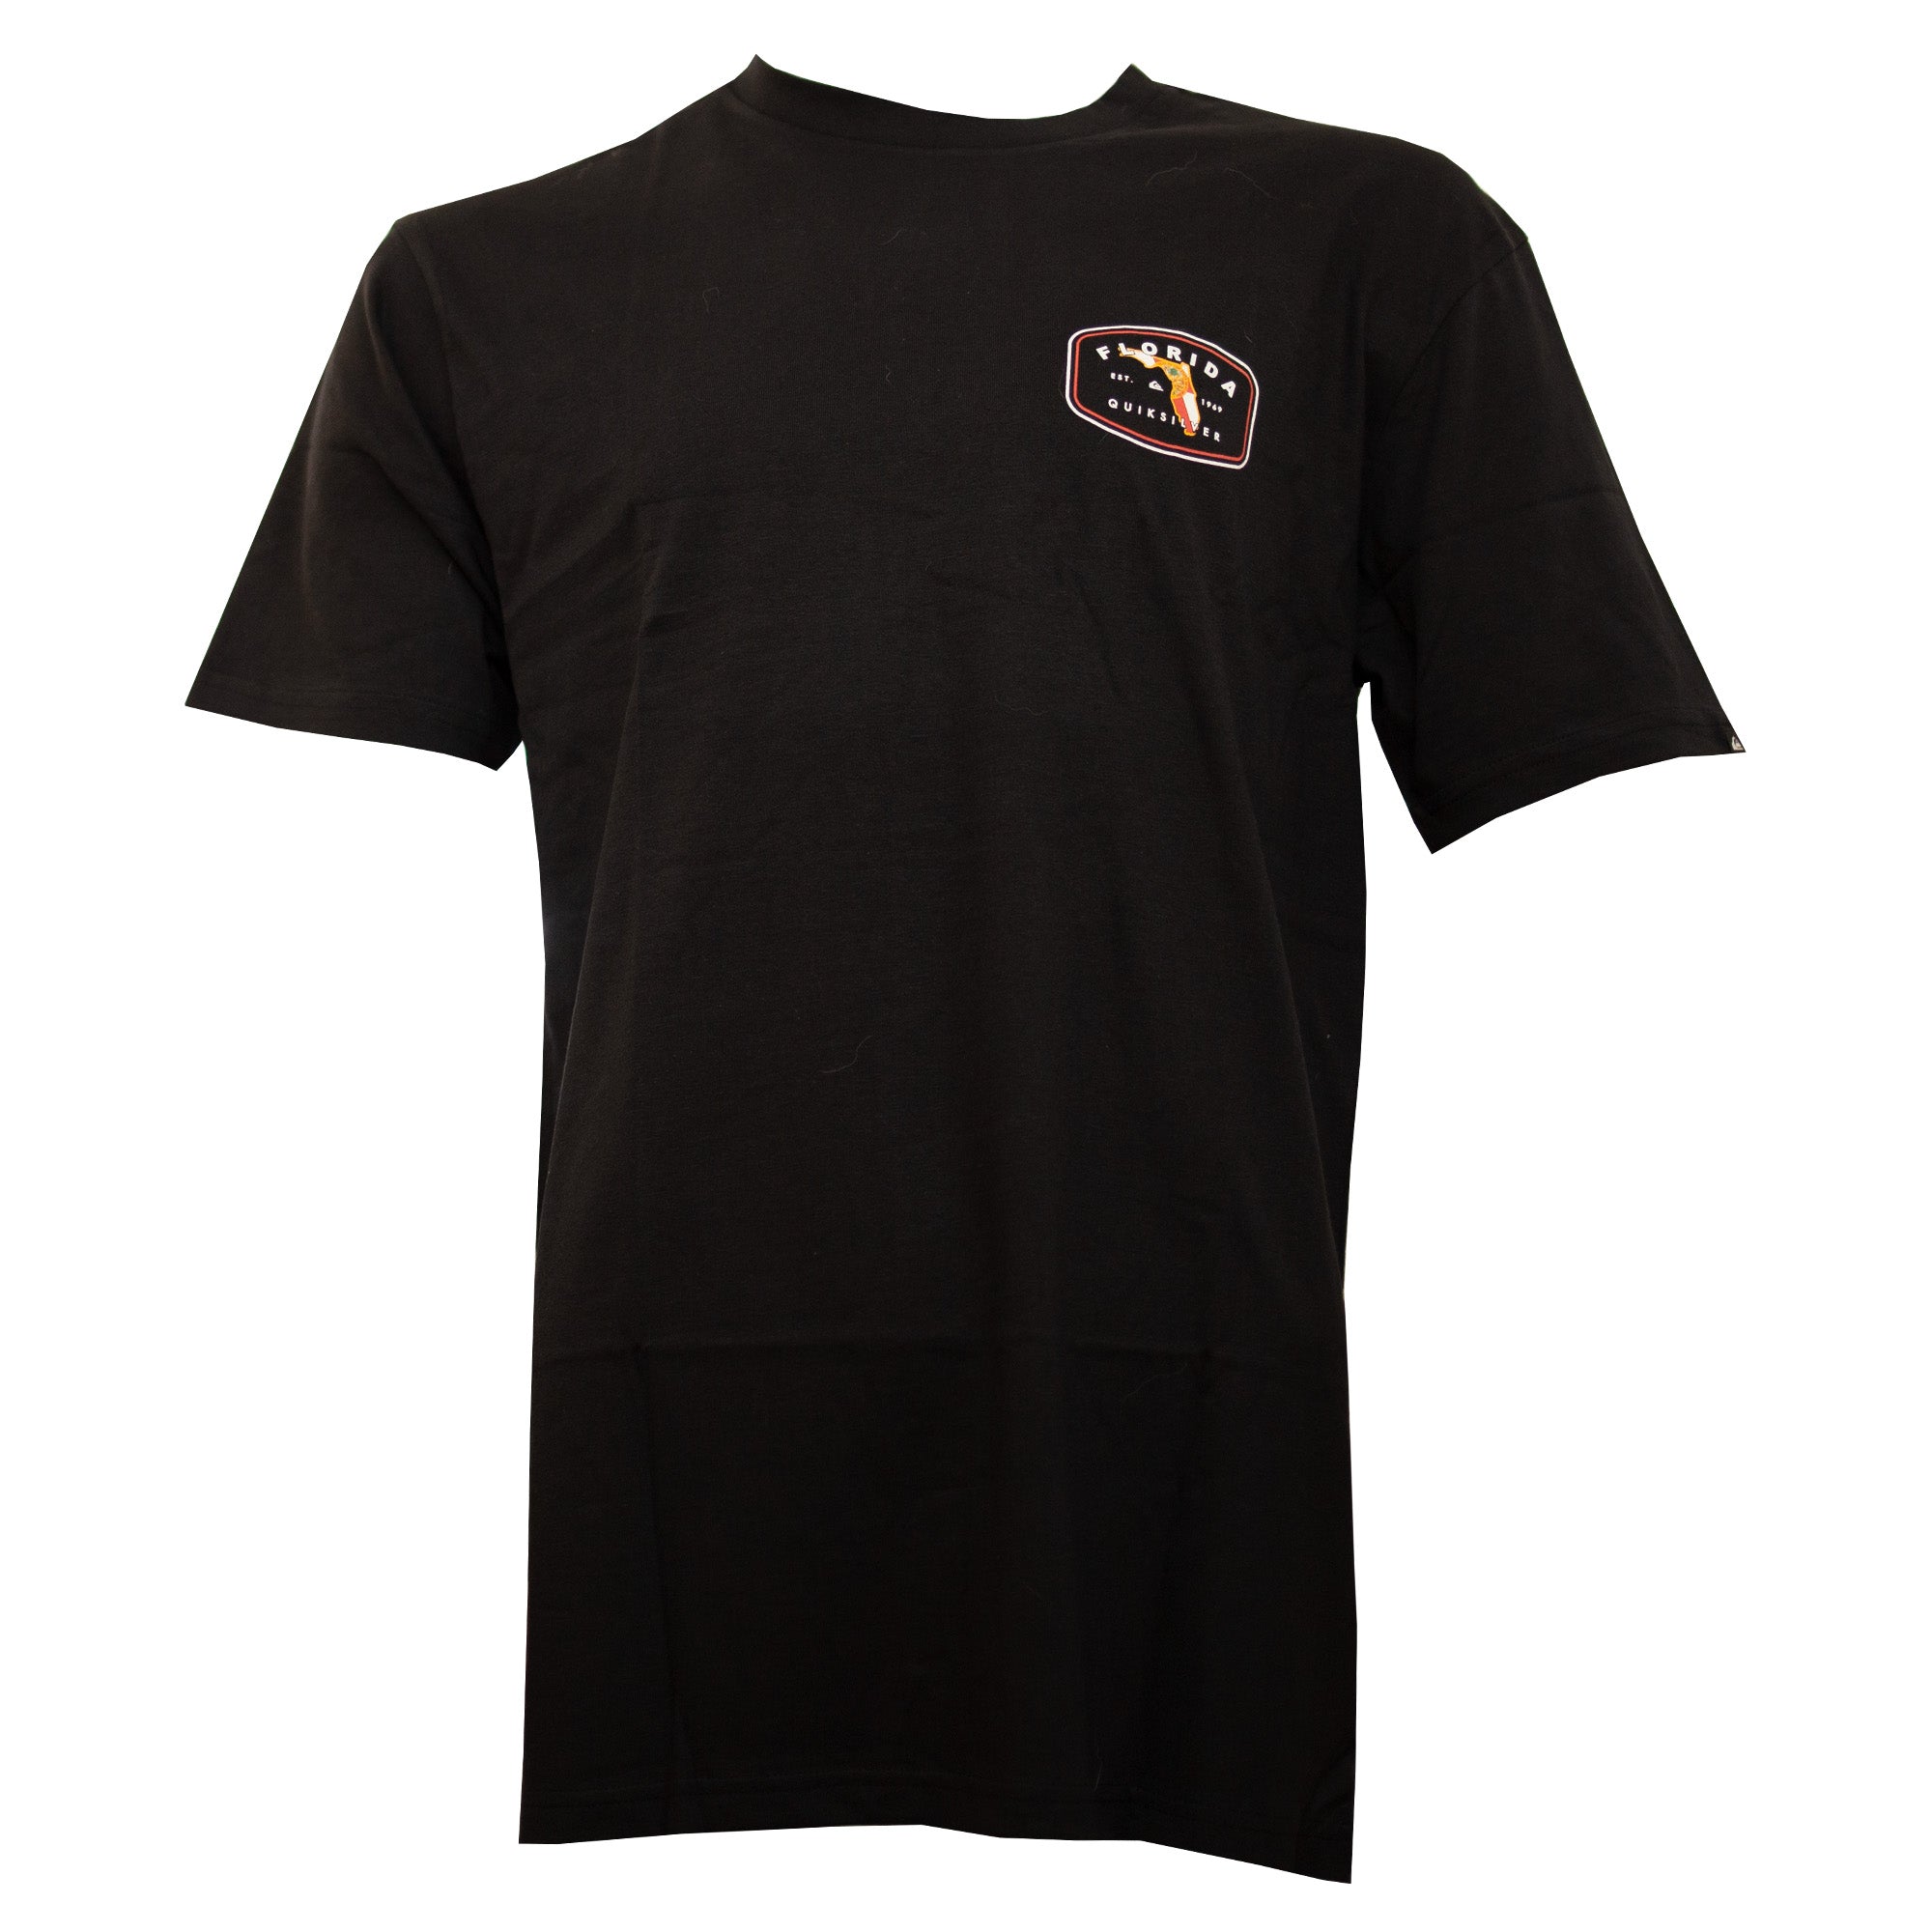 Quiksilver FL State Men's S/S T-Shirt